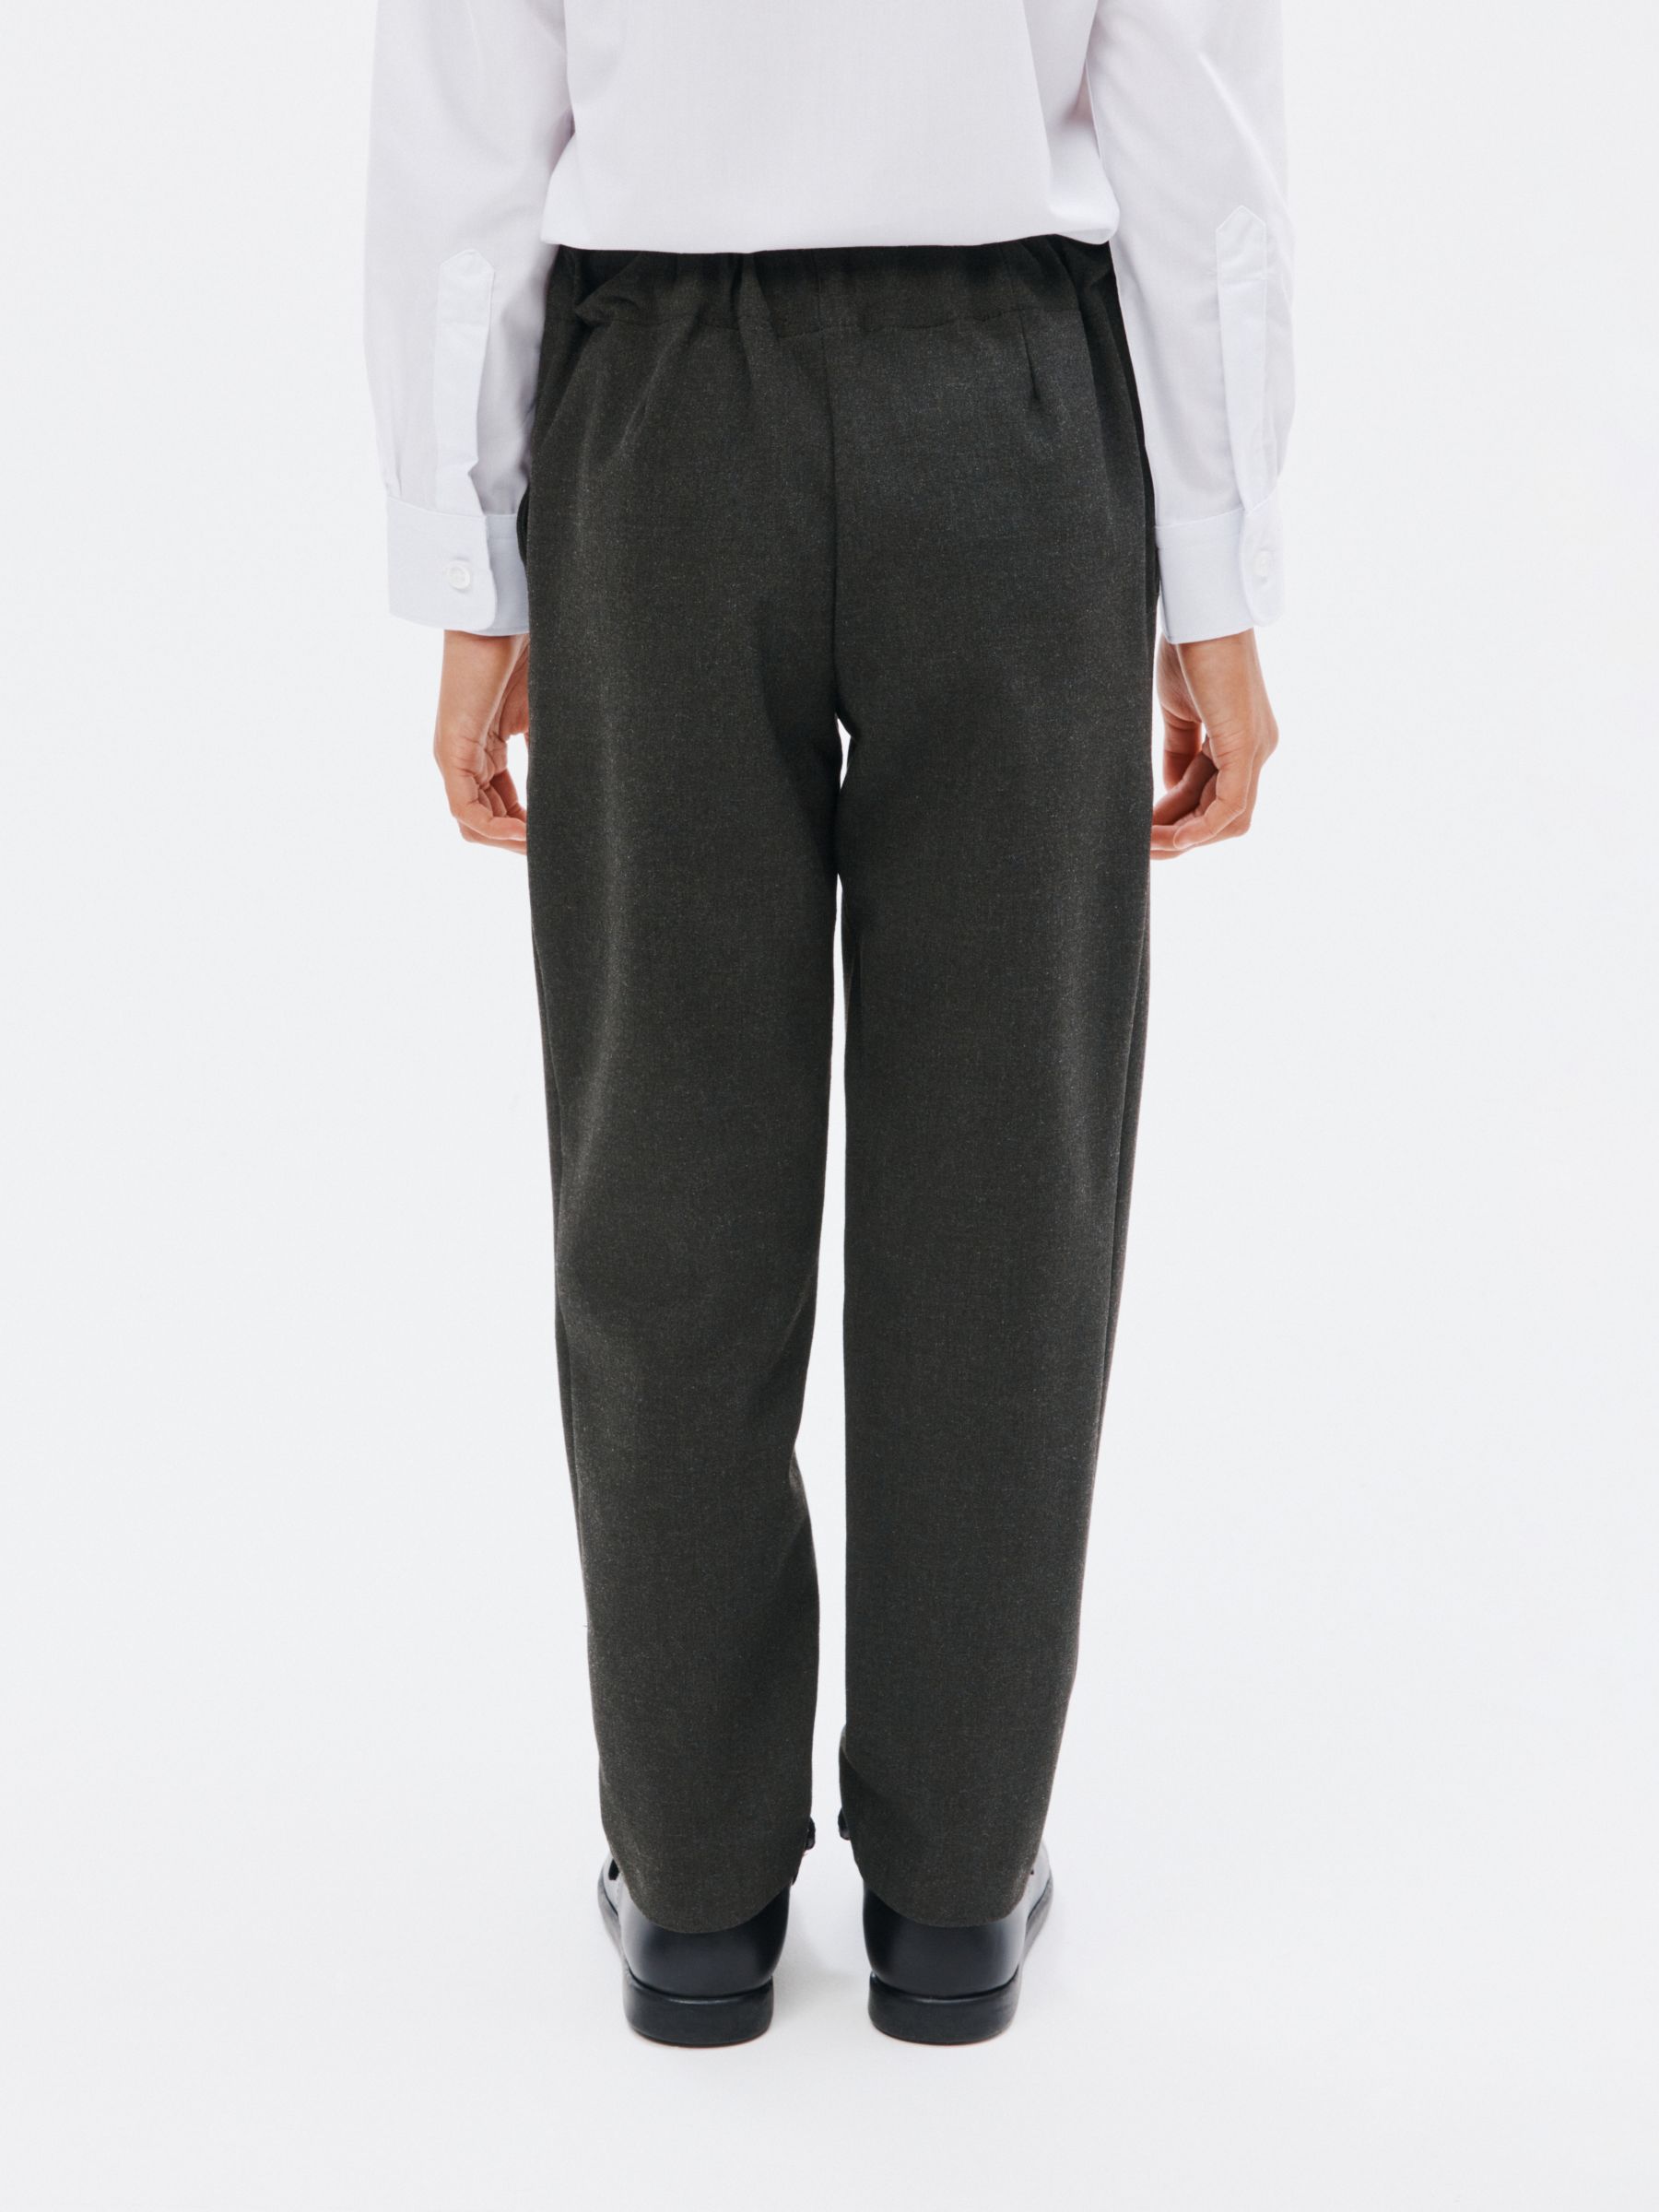 John Lewis Girls' Adjustable Waist Button School Trousers, Grey, 4 years